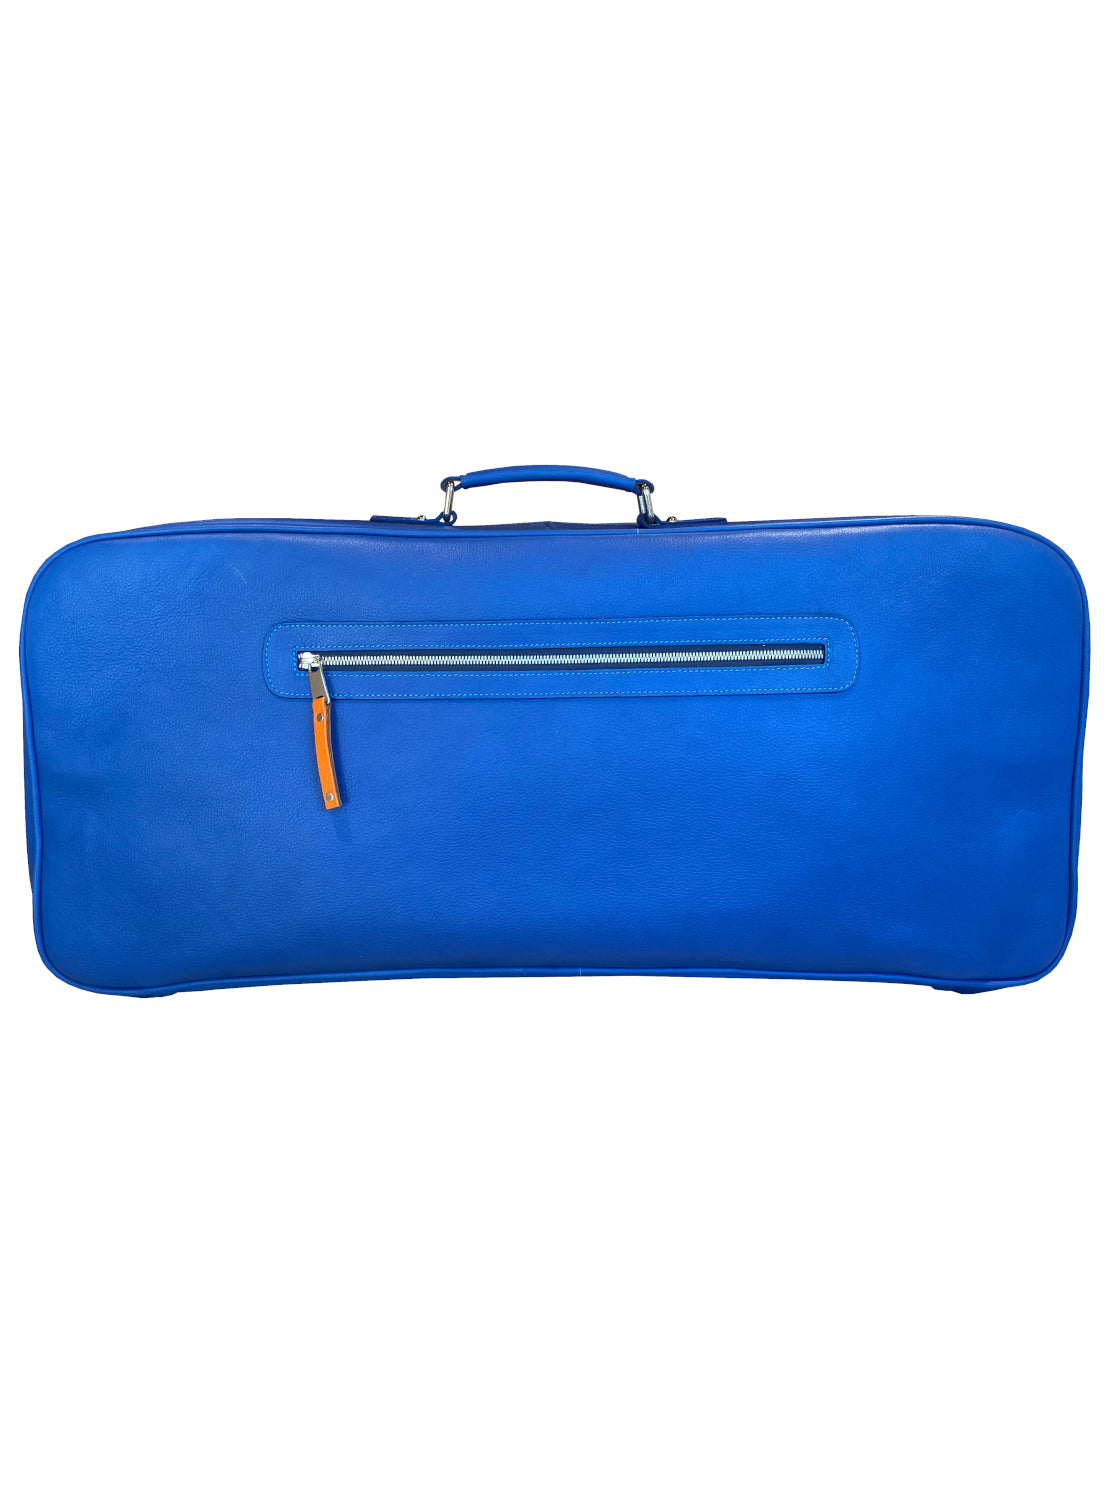 Joya Elegant Sky Leather Blue 3 Racket Capacity Tennis Bag 